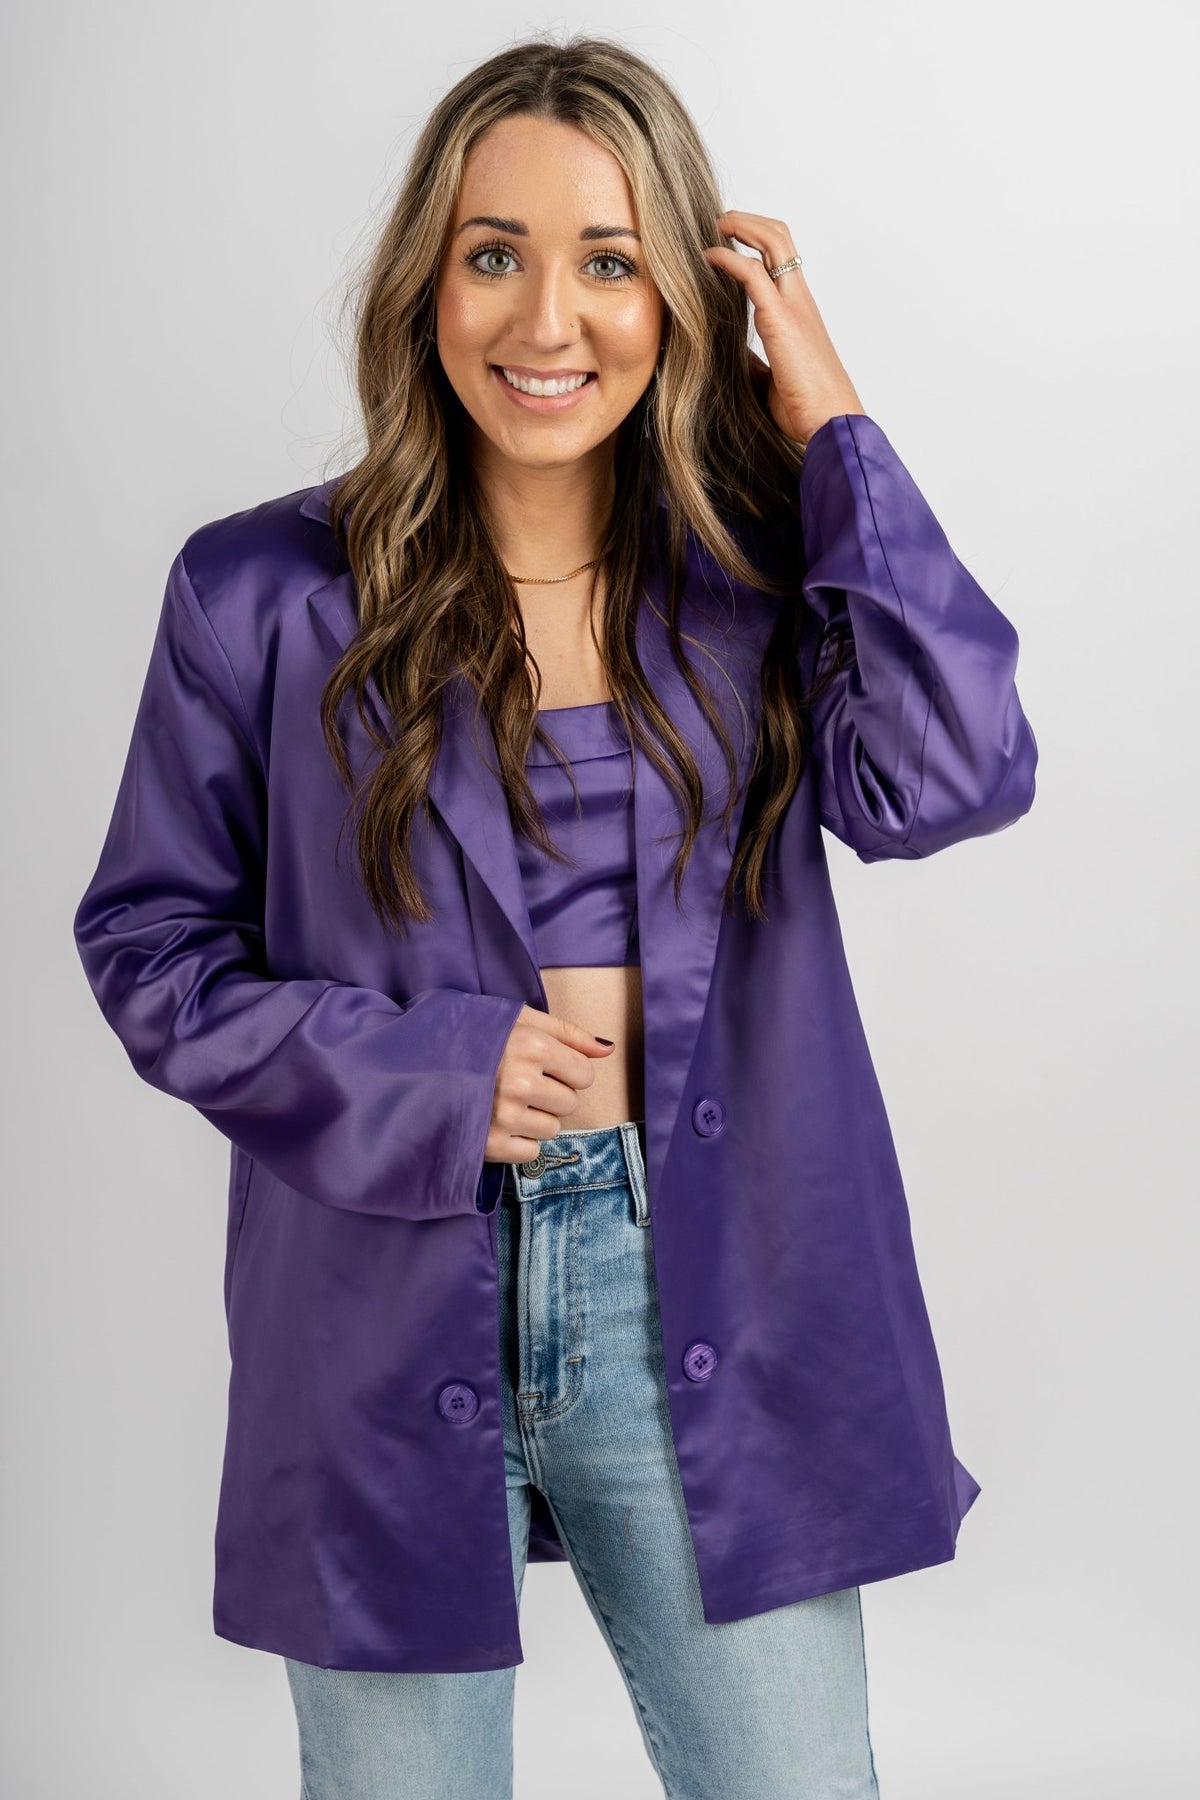 Satin blazer jacket grape - Cute blazer - Trendy Jackets and Blazers at Lush Fashion Lounge Boutique in Oklahoma City